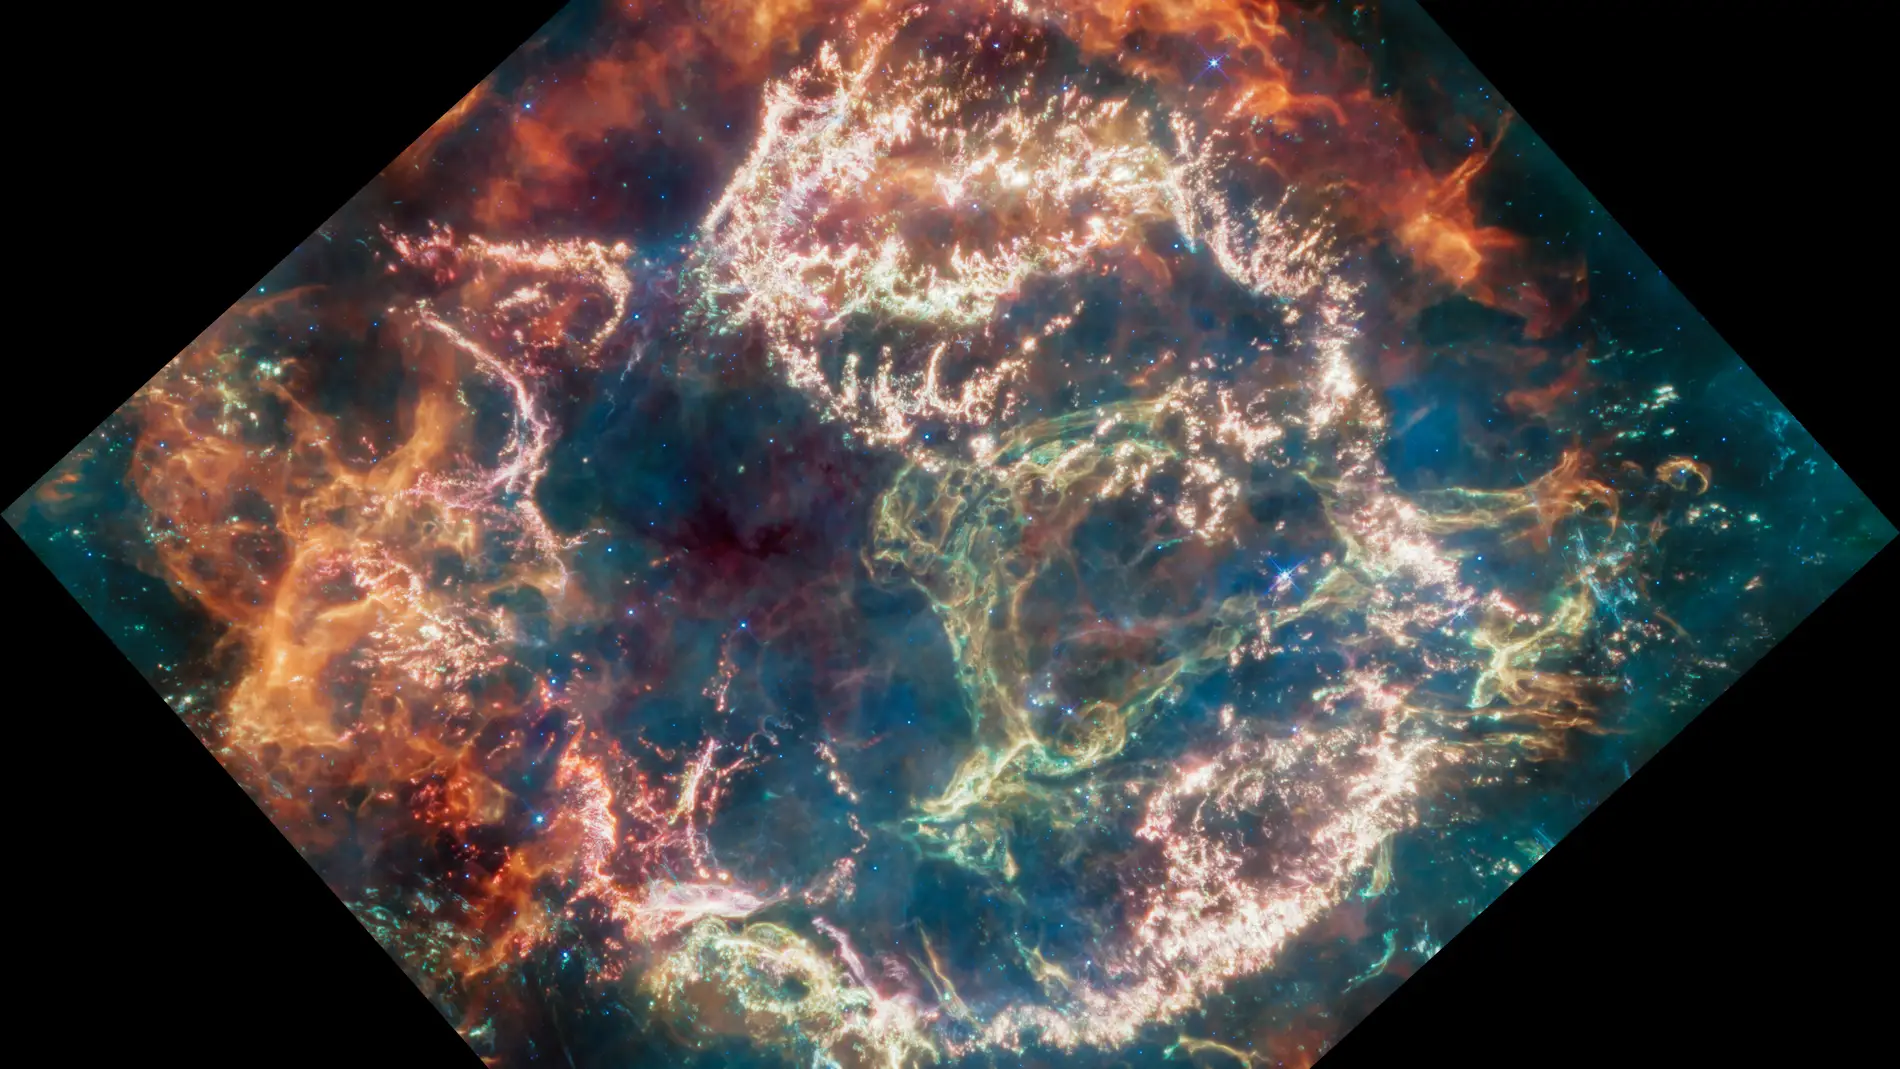 Detalle de la supernova Cassiopeia A